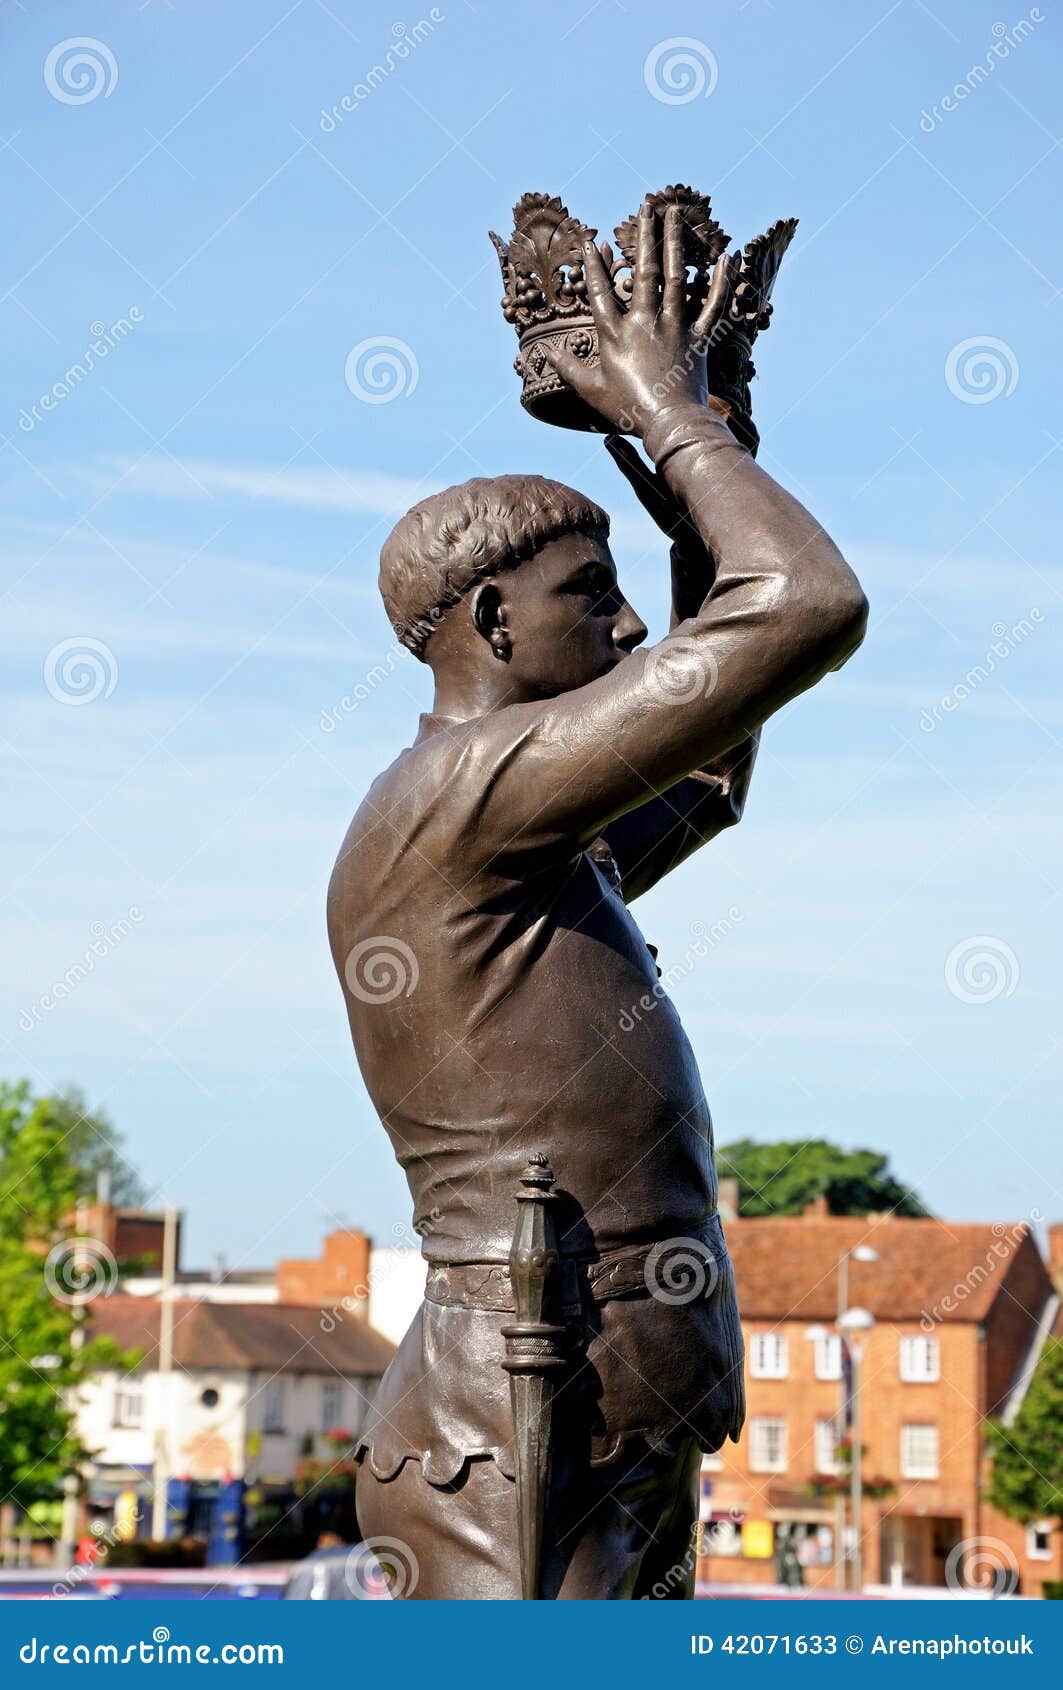 prince hal statue, stratford-upon-avon.